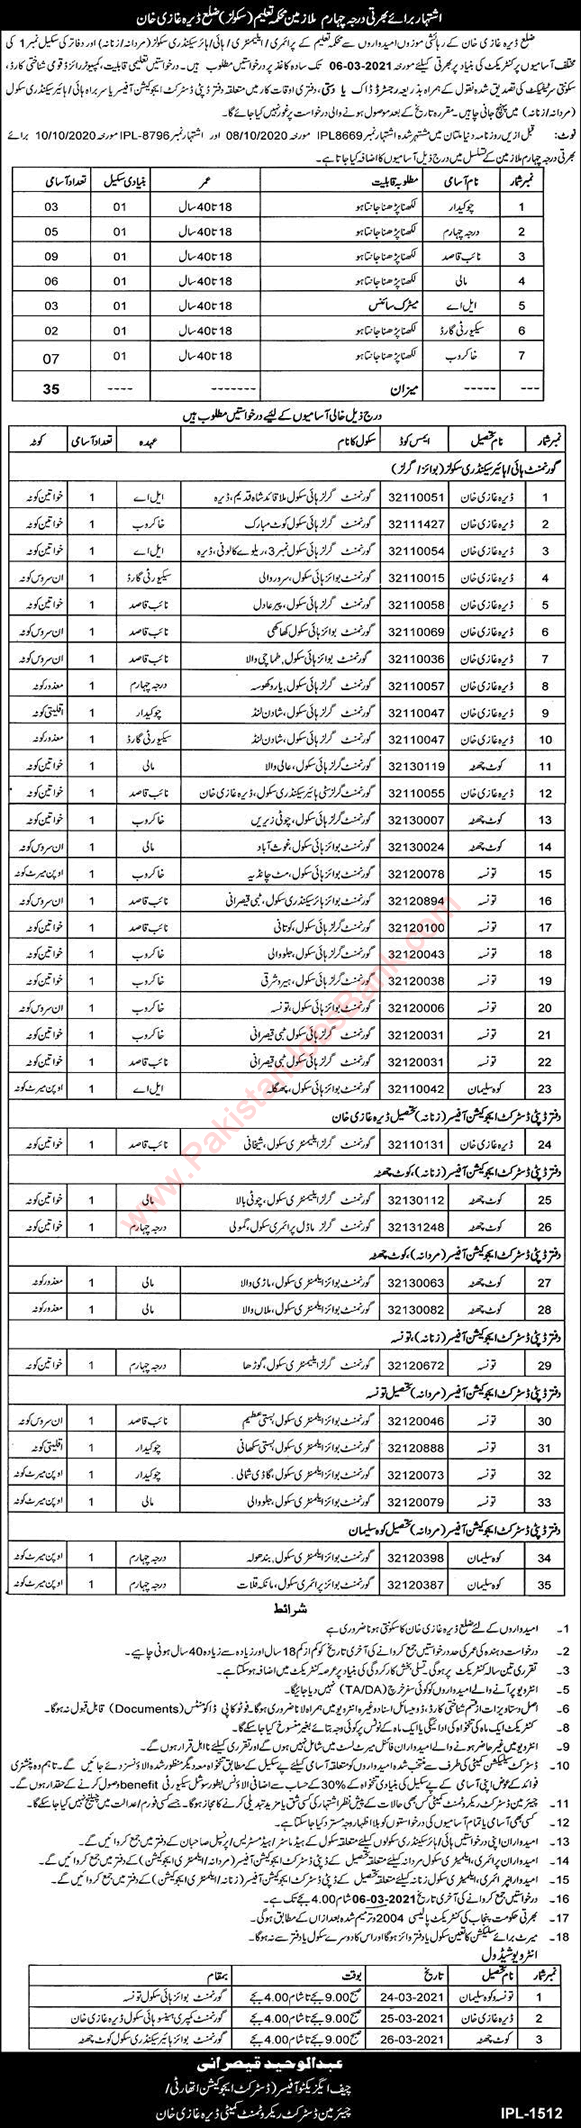 School Education Department Dera Ghazi Khan Jobs 2021 February Naib Qasid, Khakroob & Others Latest